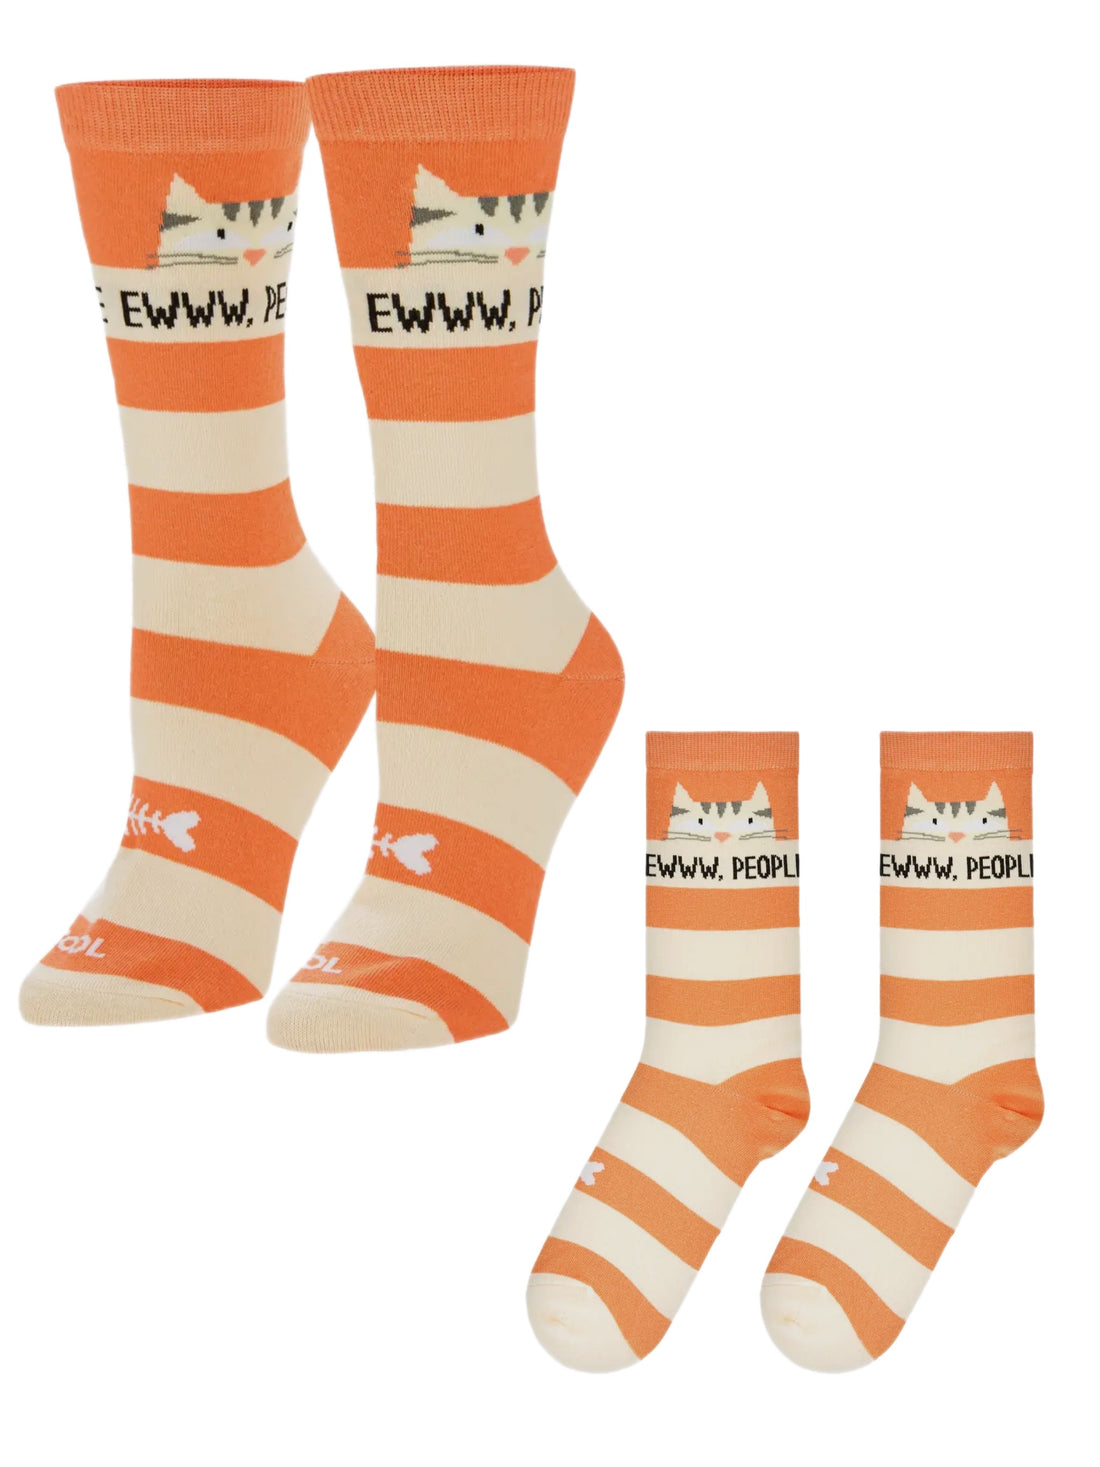 Ew People Socks (Cat Version)